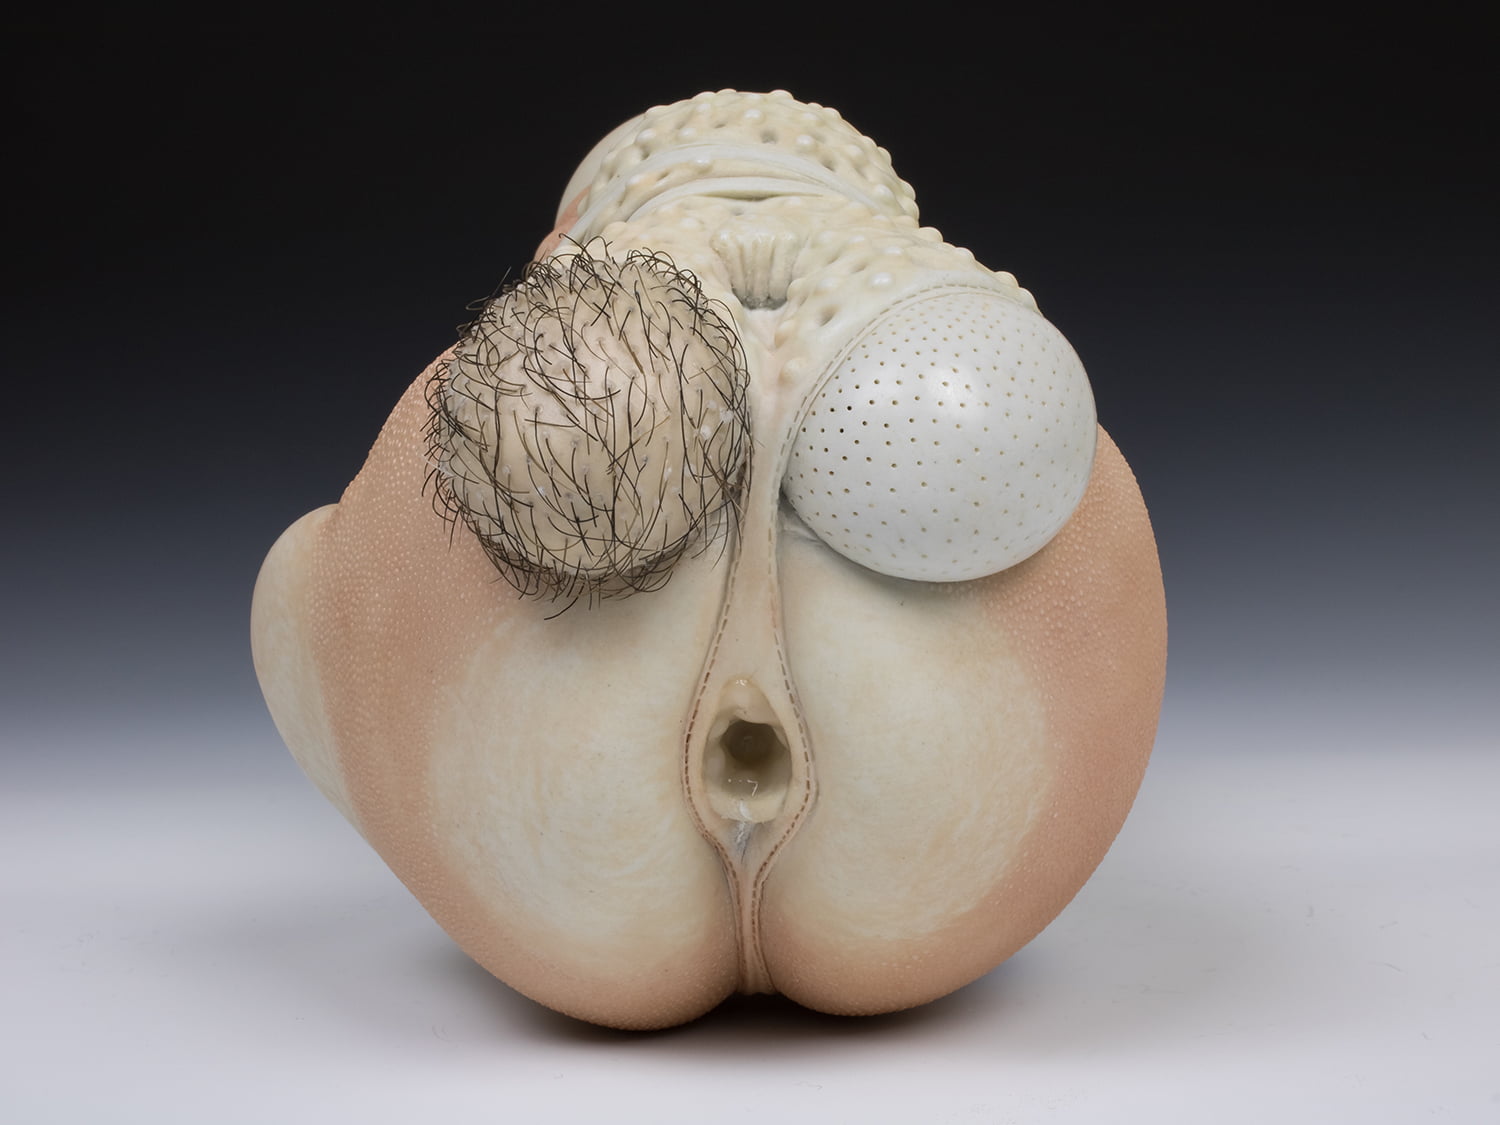 Jason Briggs "Strut" (alternate view). porcelain, hair, and mixed media sculpture ceramics.